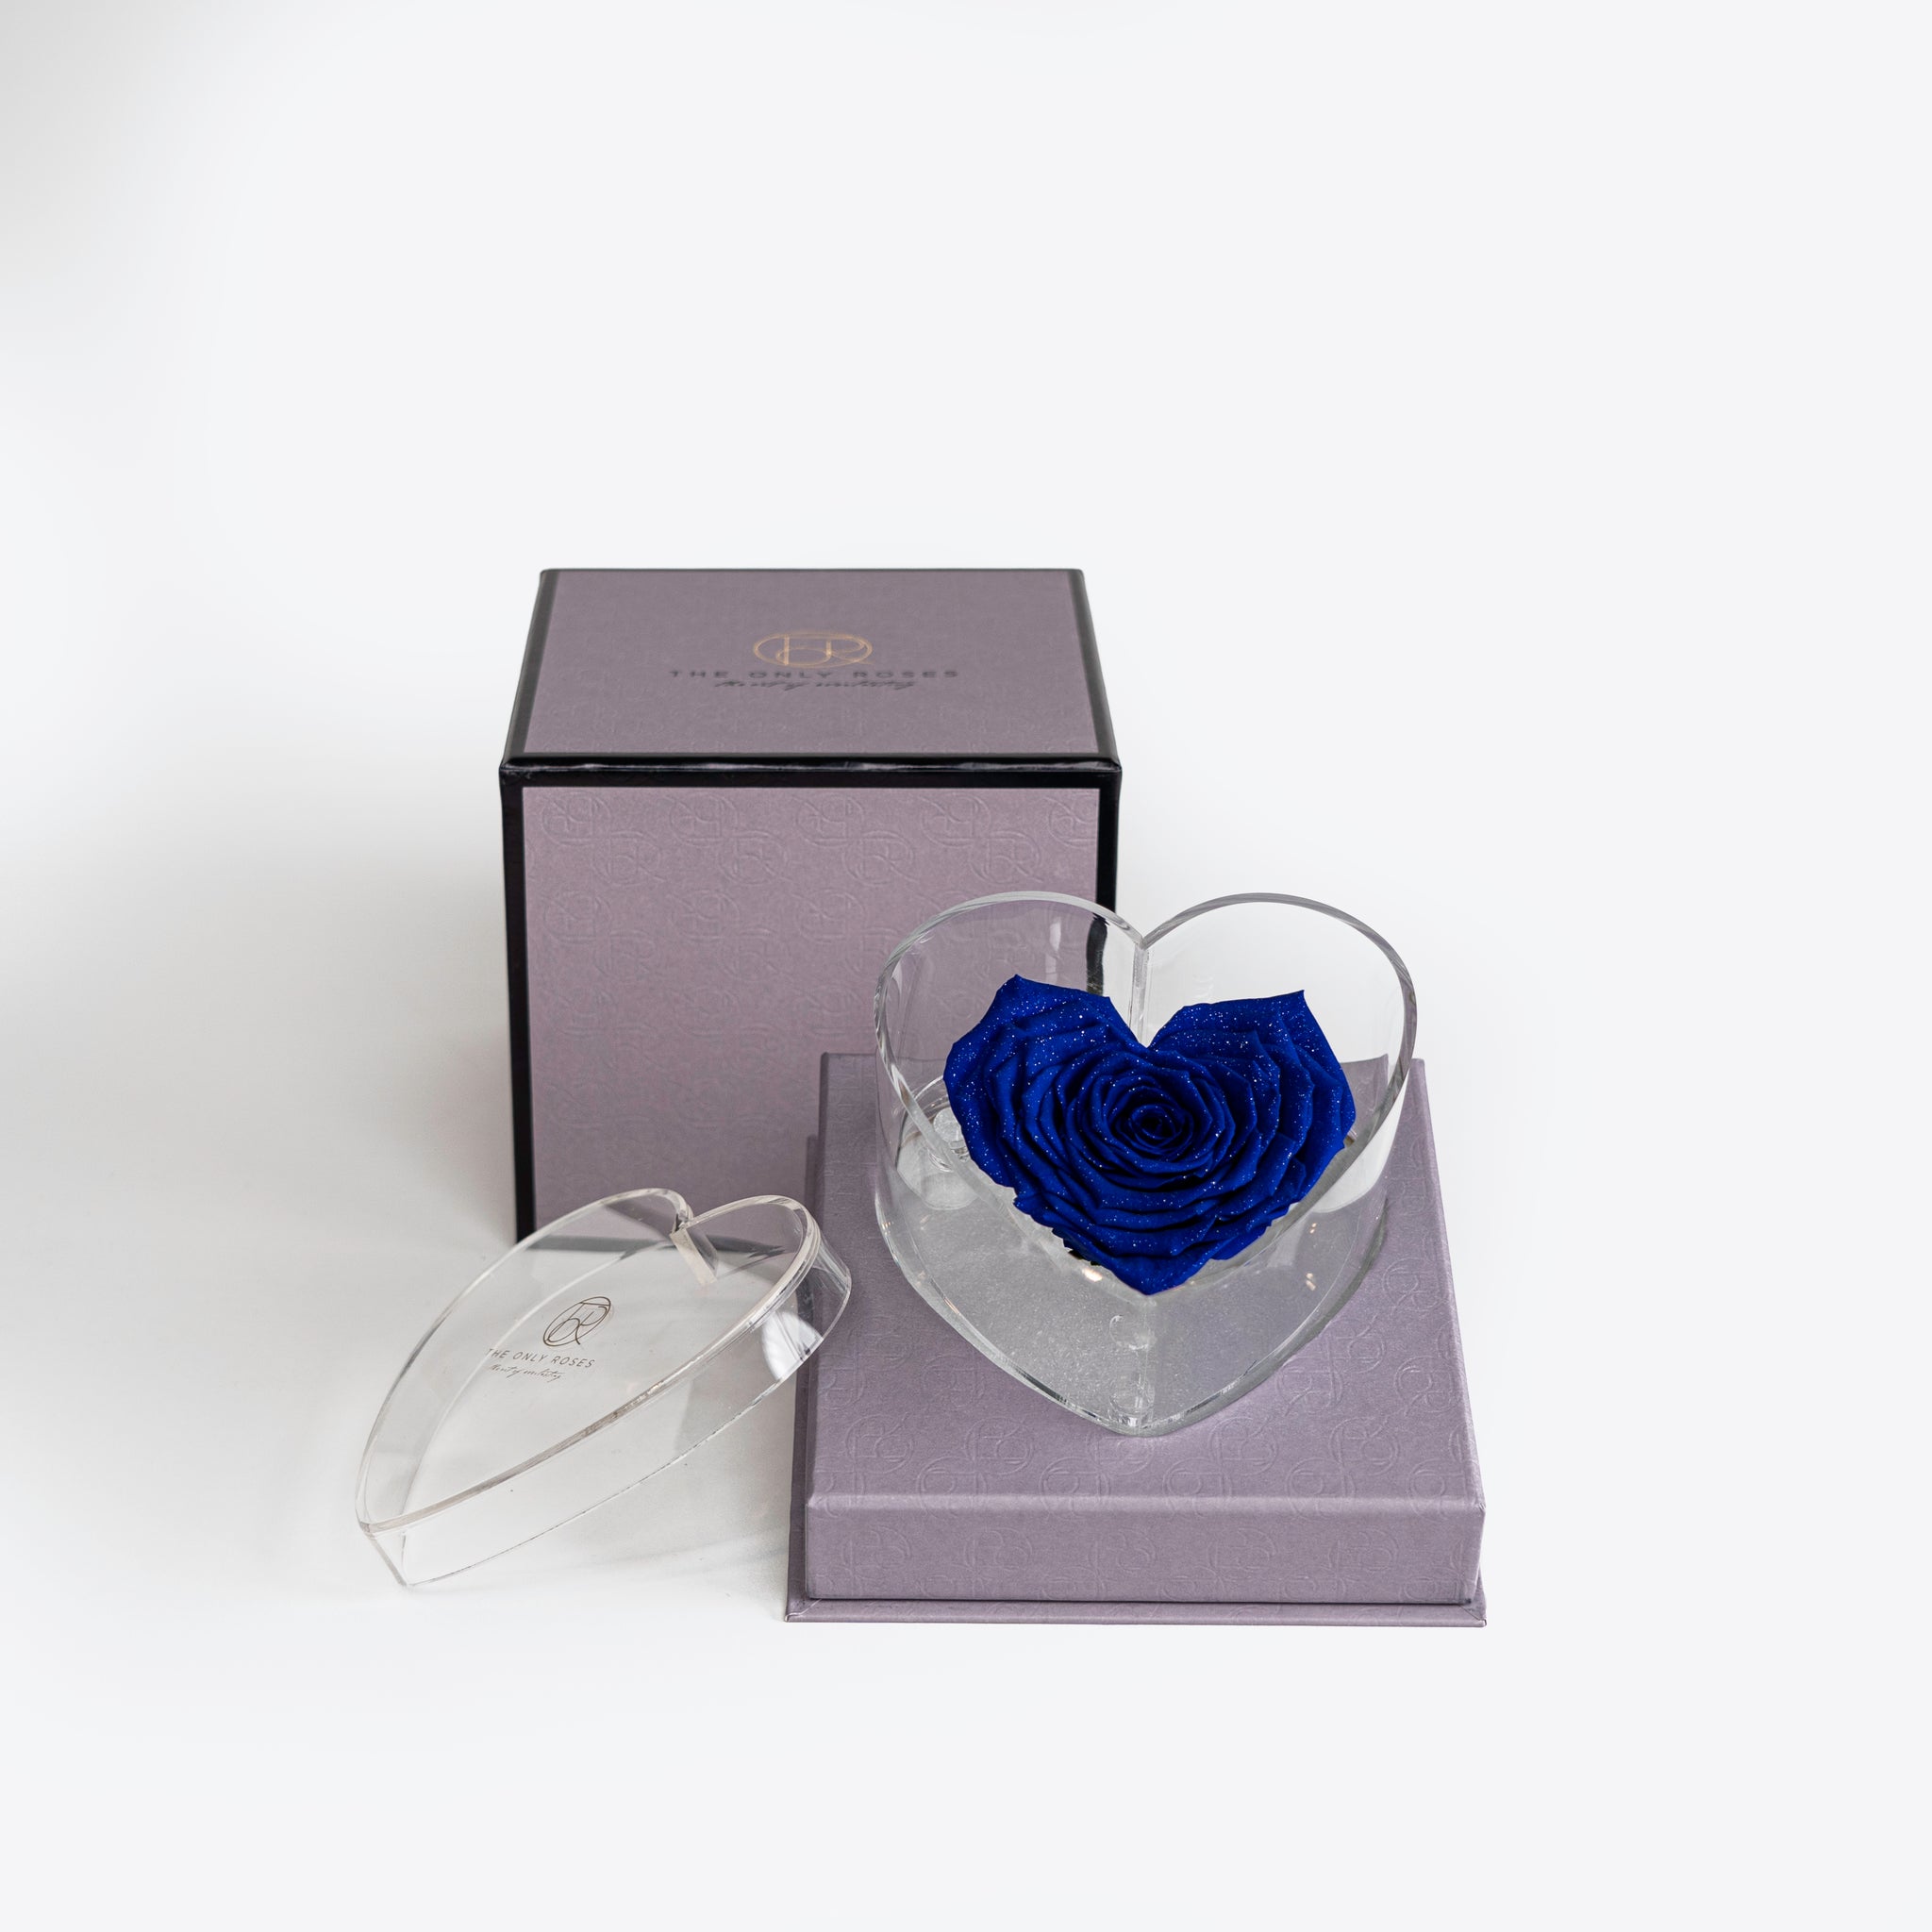 Heart Shaped Rose in Heart Jewelry Box